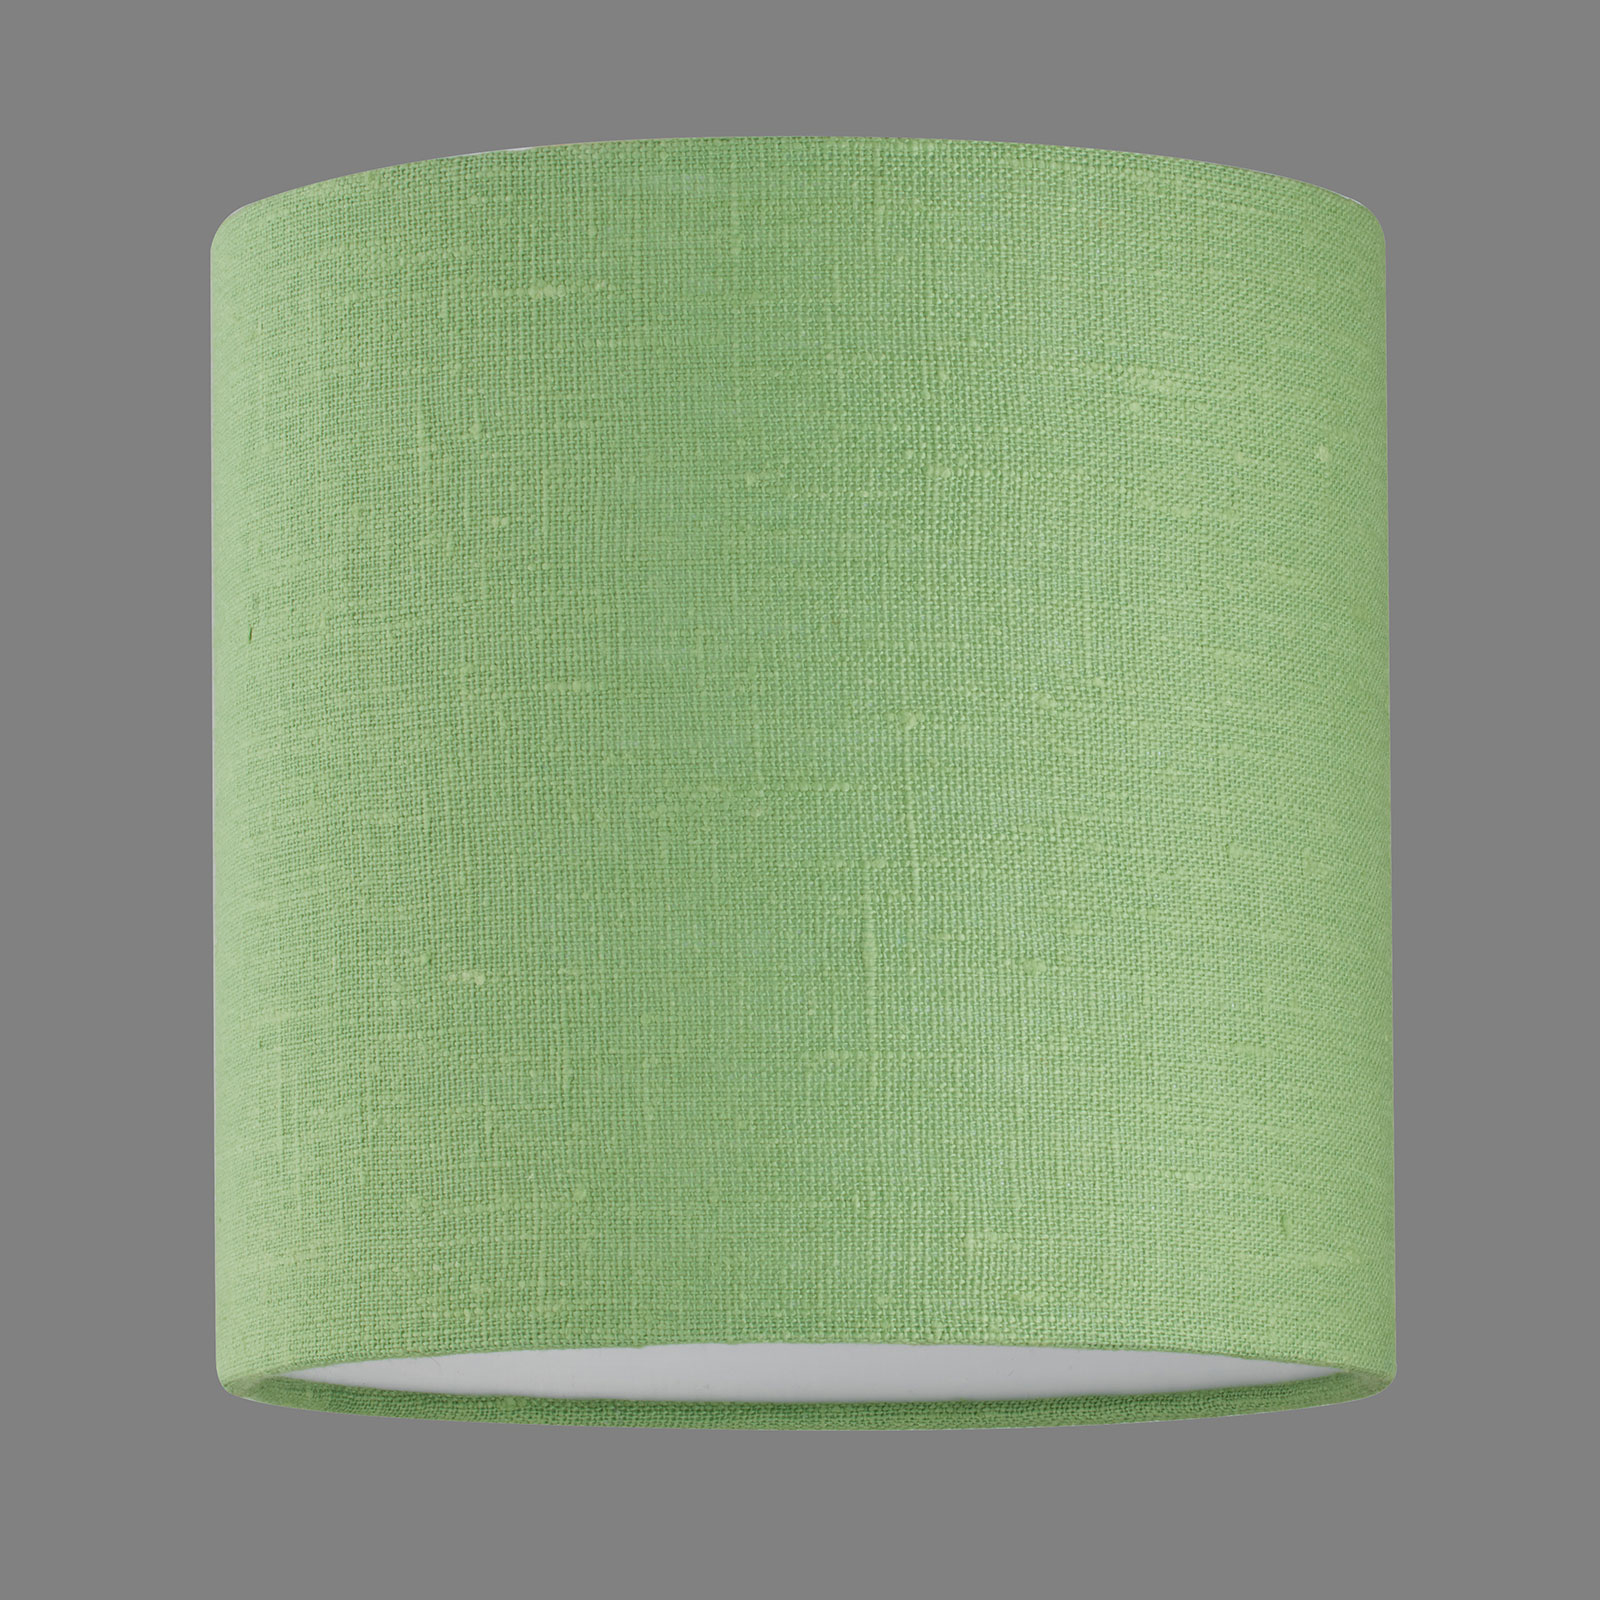 70210 lampshade light green linen for 54221